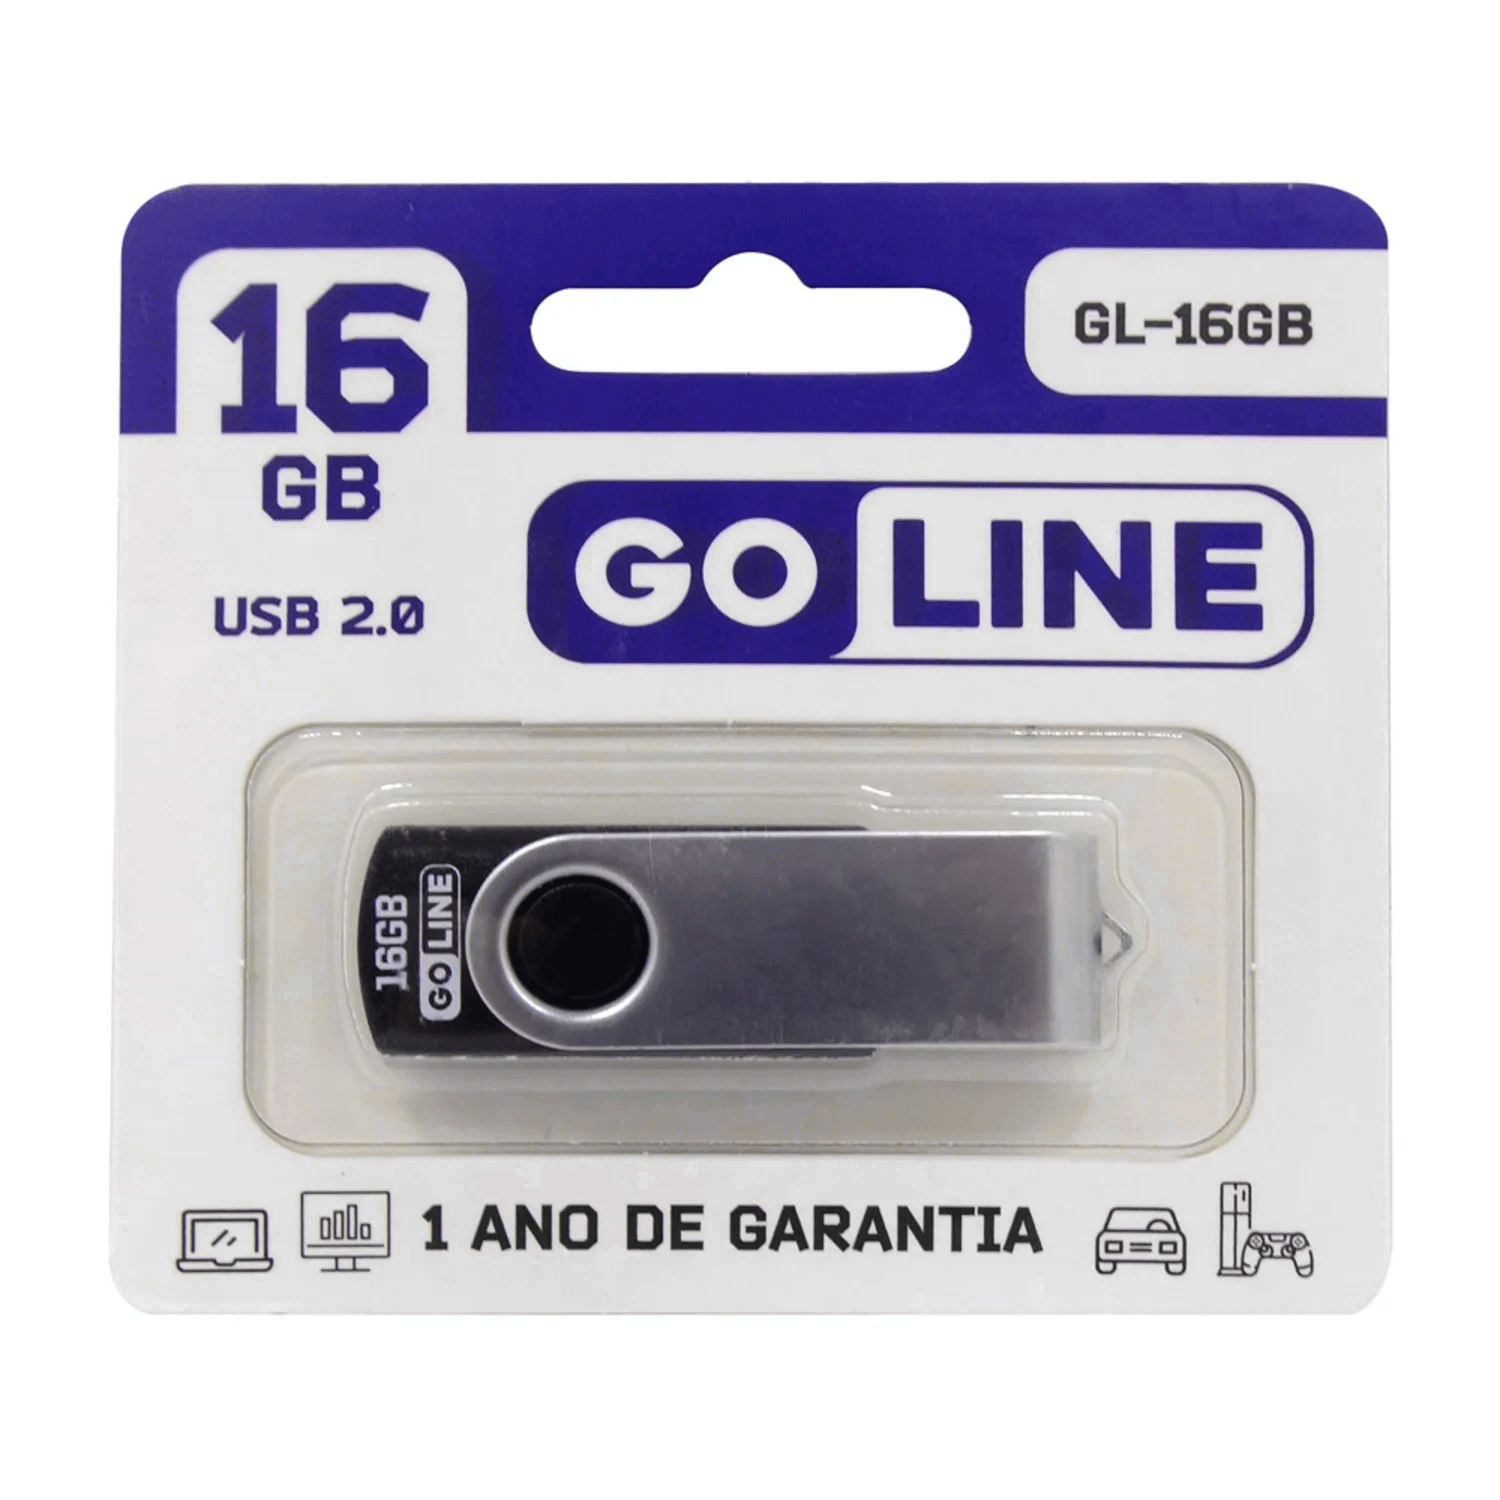 Pendrive GoLine GL-16GB 16GB / USB 2.0 - Preto